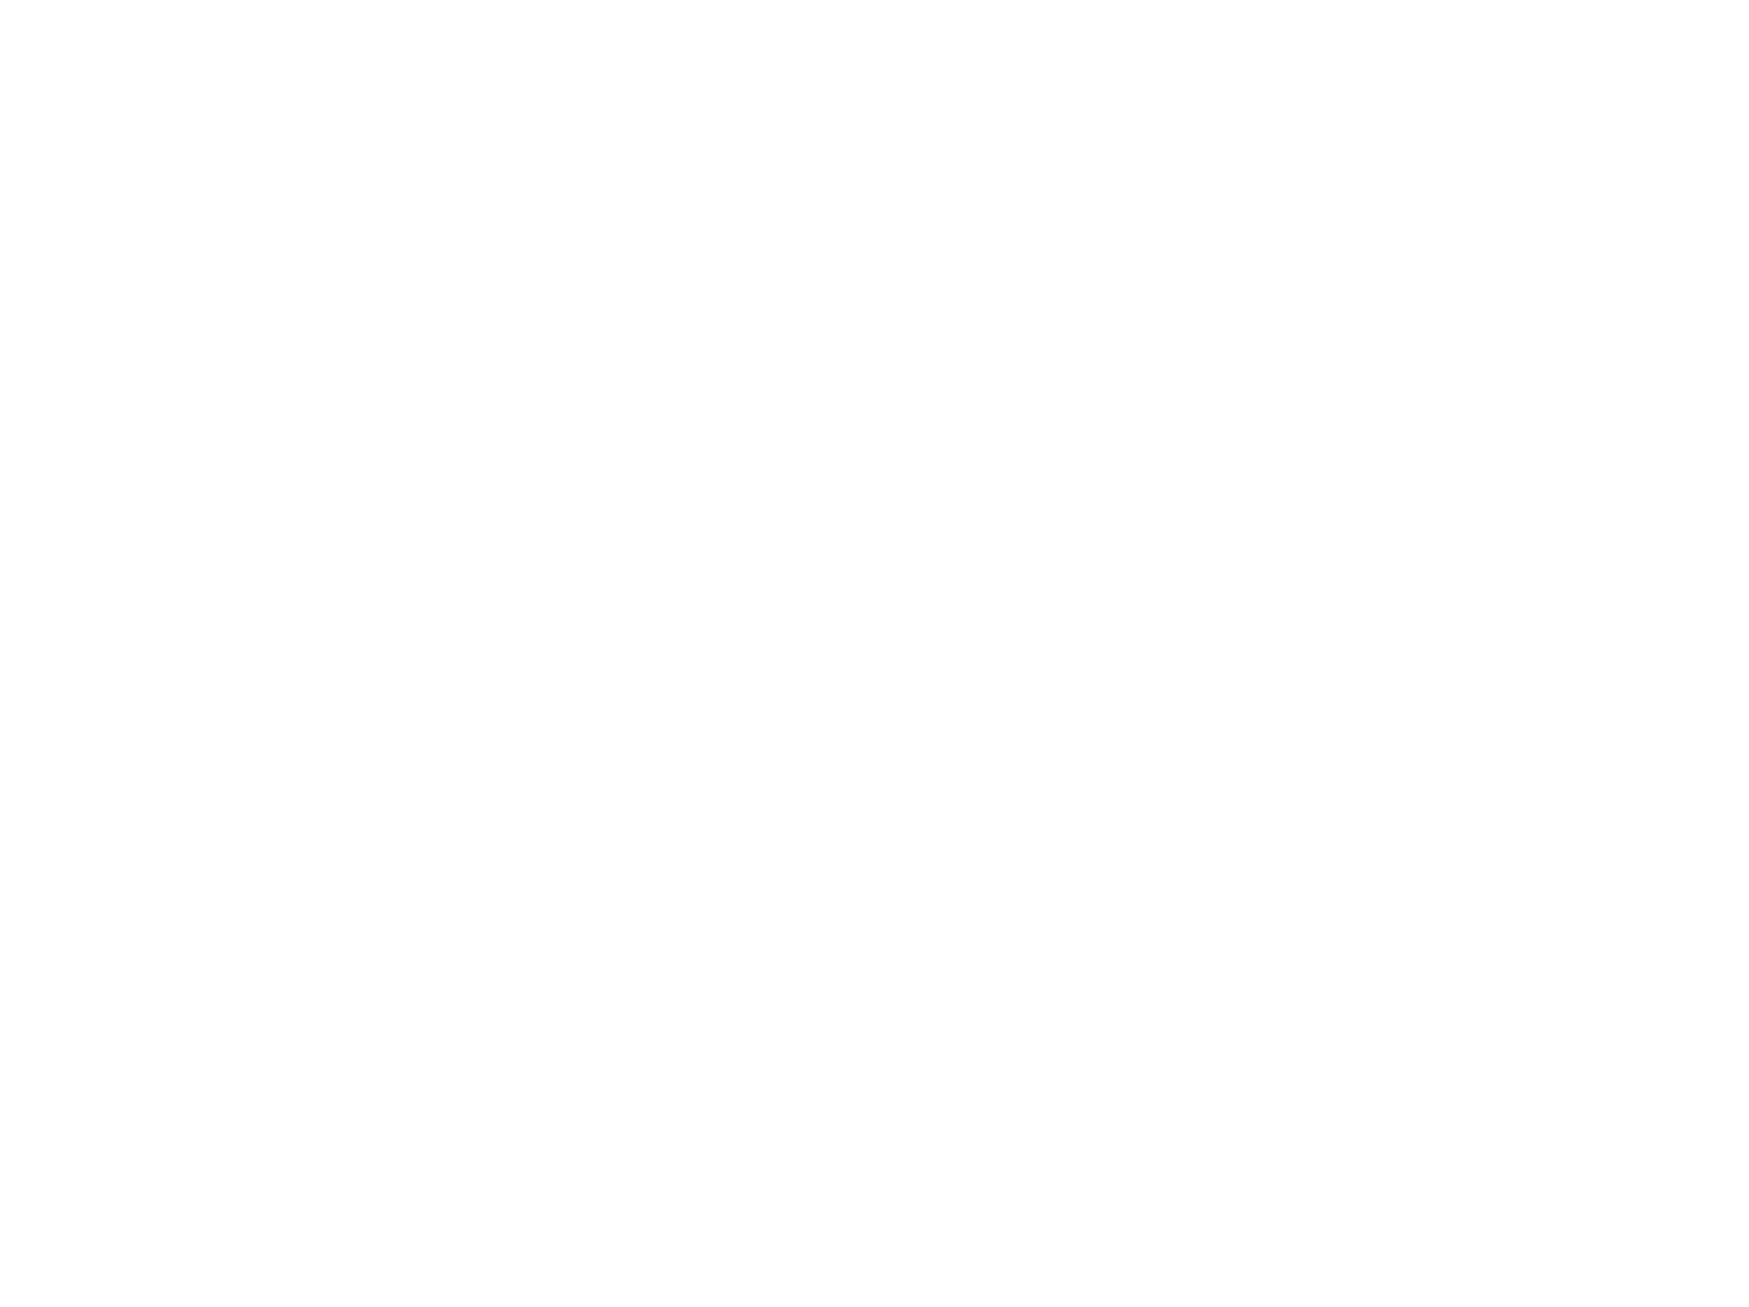 Michelangelo's Sistine Chapel: Glasgow Exhibit